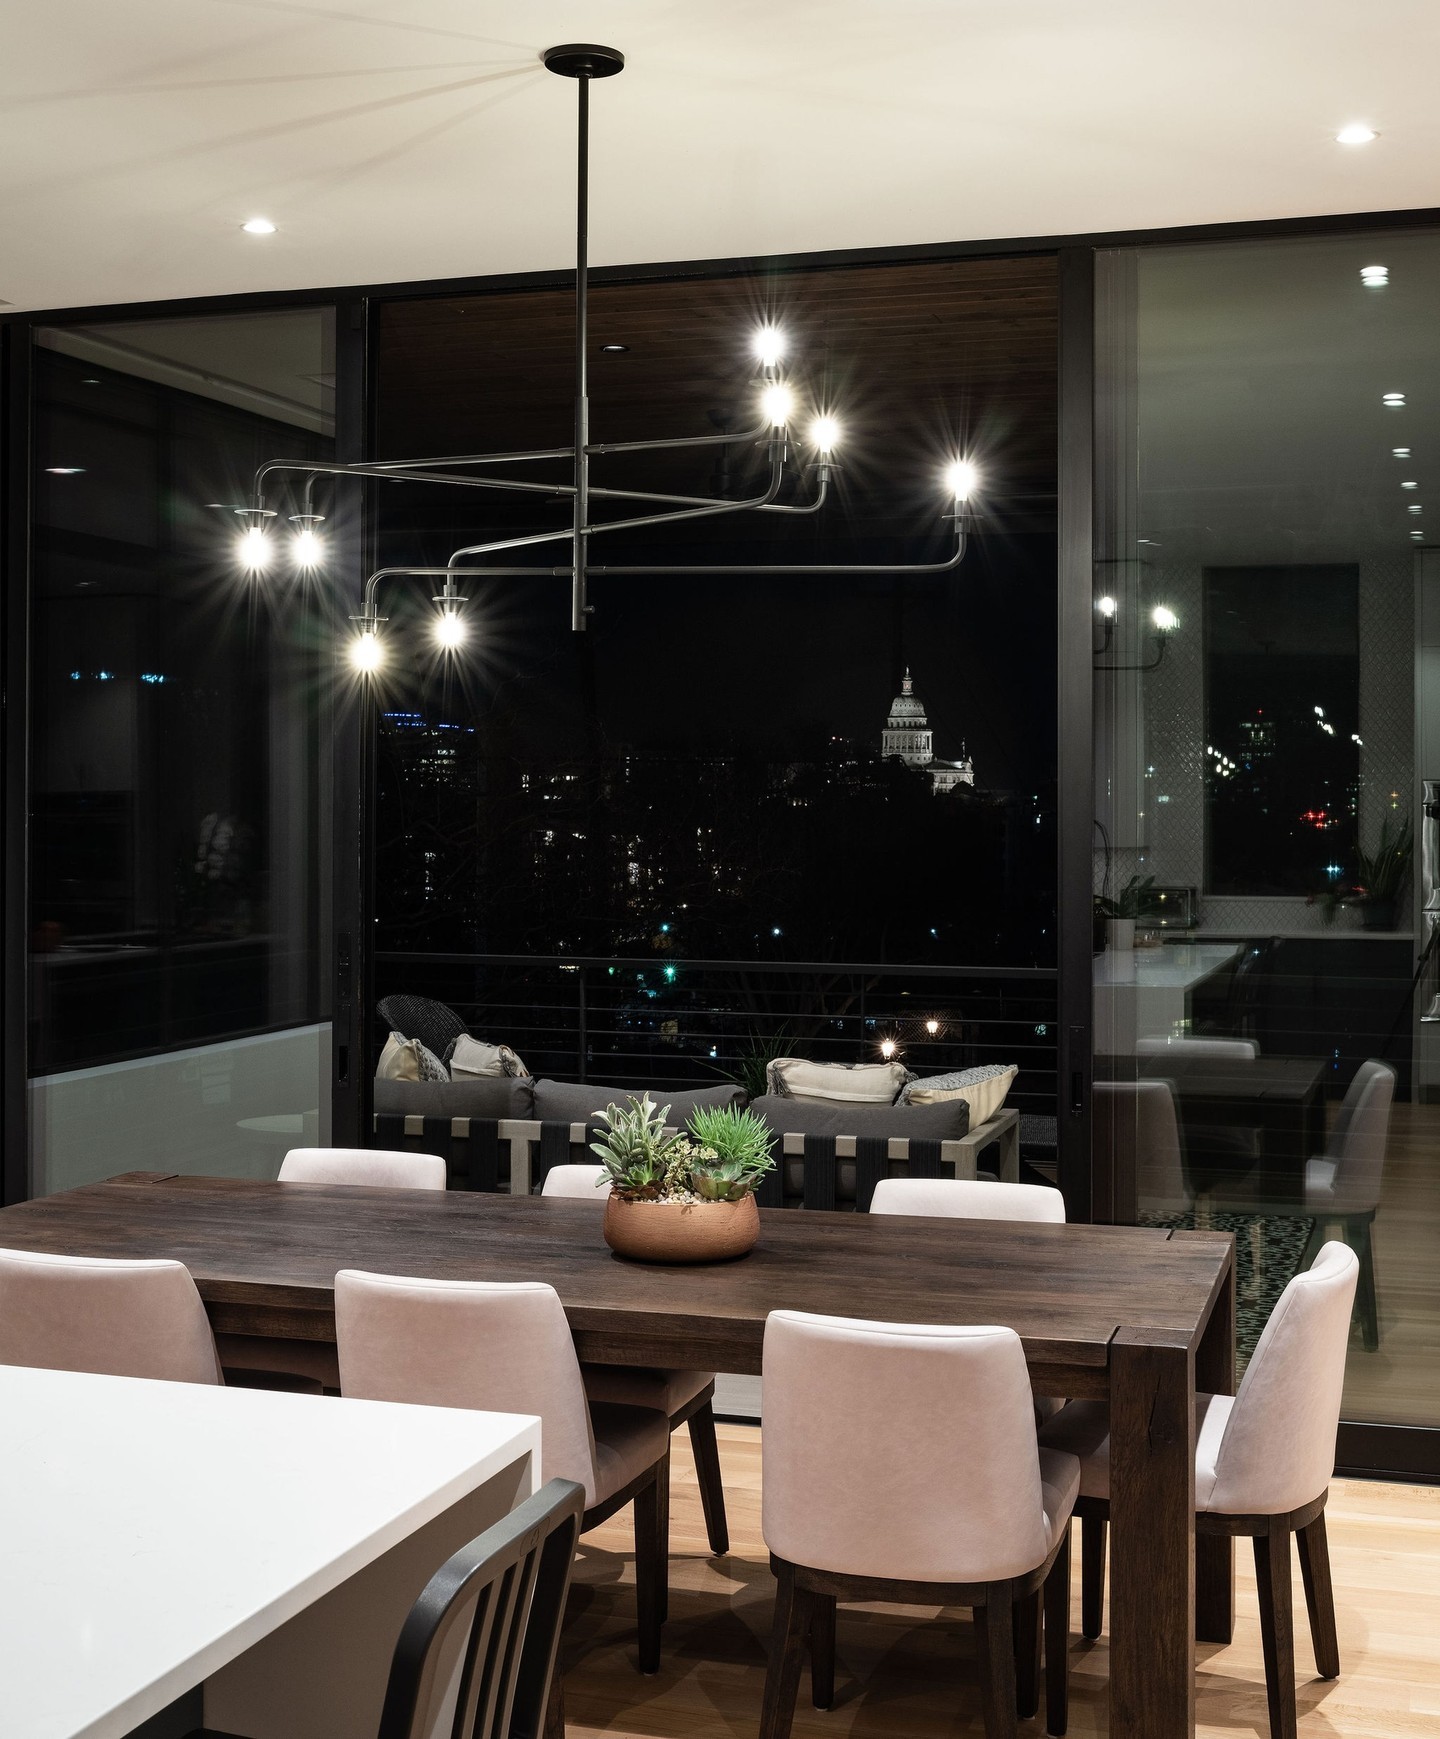 Dinner + City Views. ⁠
@dc_architechture⁠
⁠
⁠
⁠
⁠
⁠